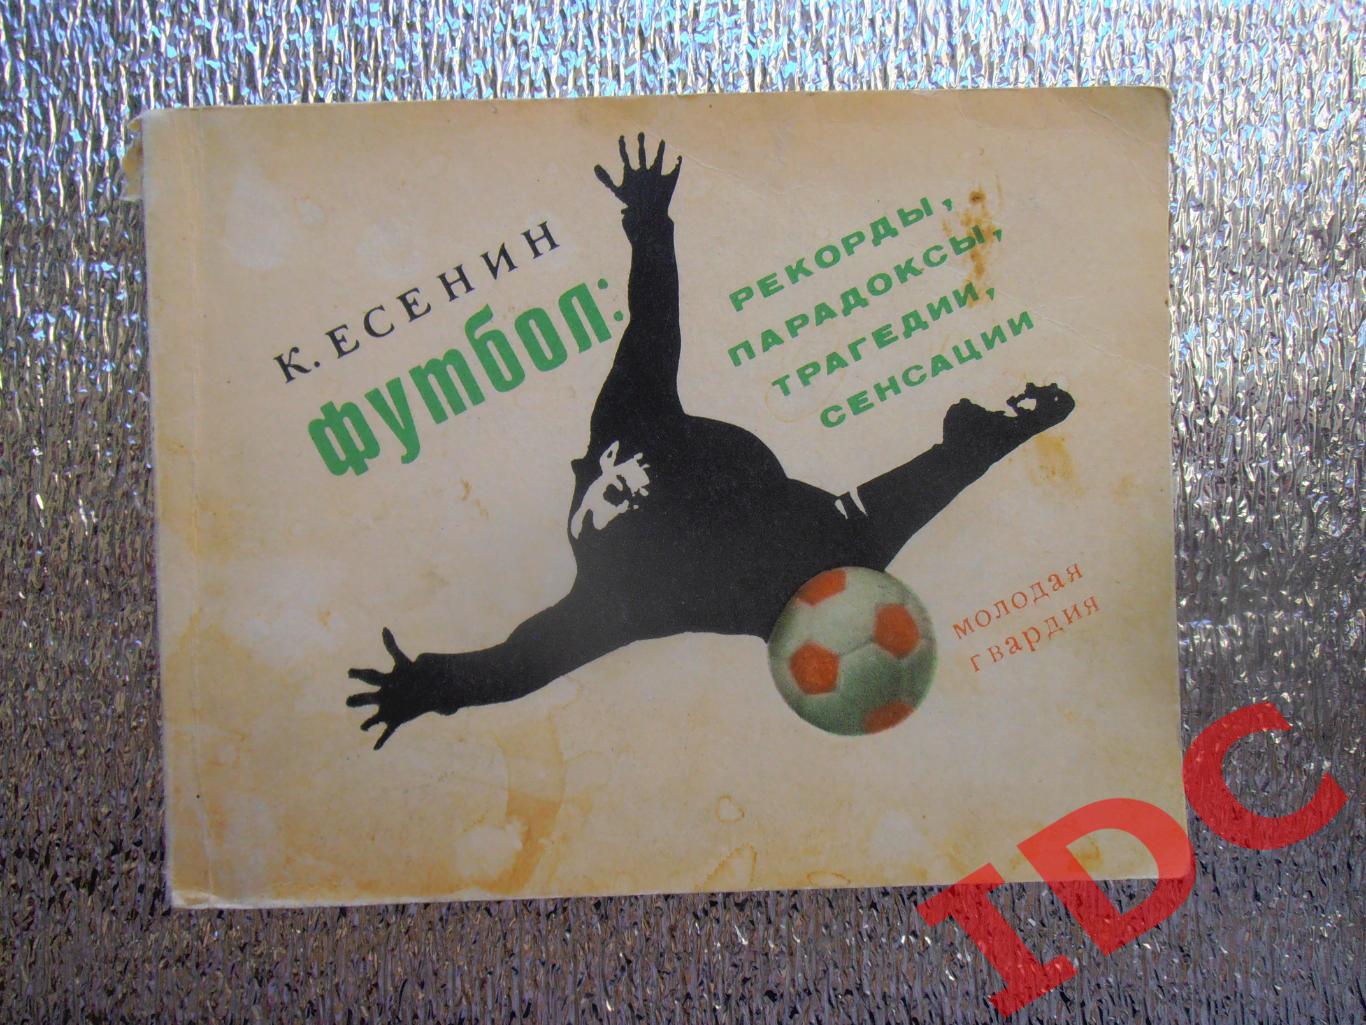 К.Есенин Футбол:рекорды,парадоксы,трагедии,сенсации Москва 1970